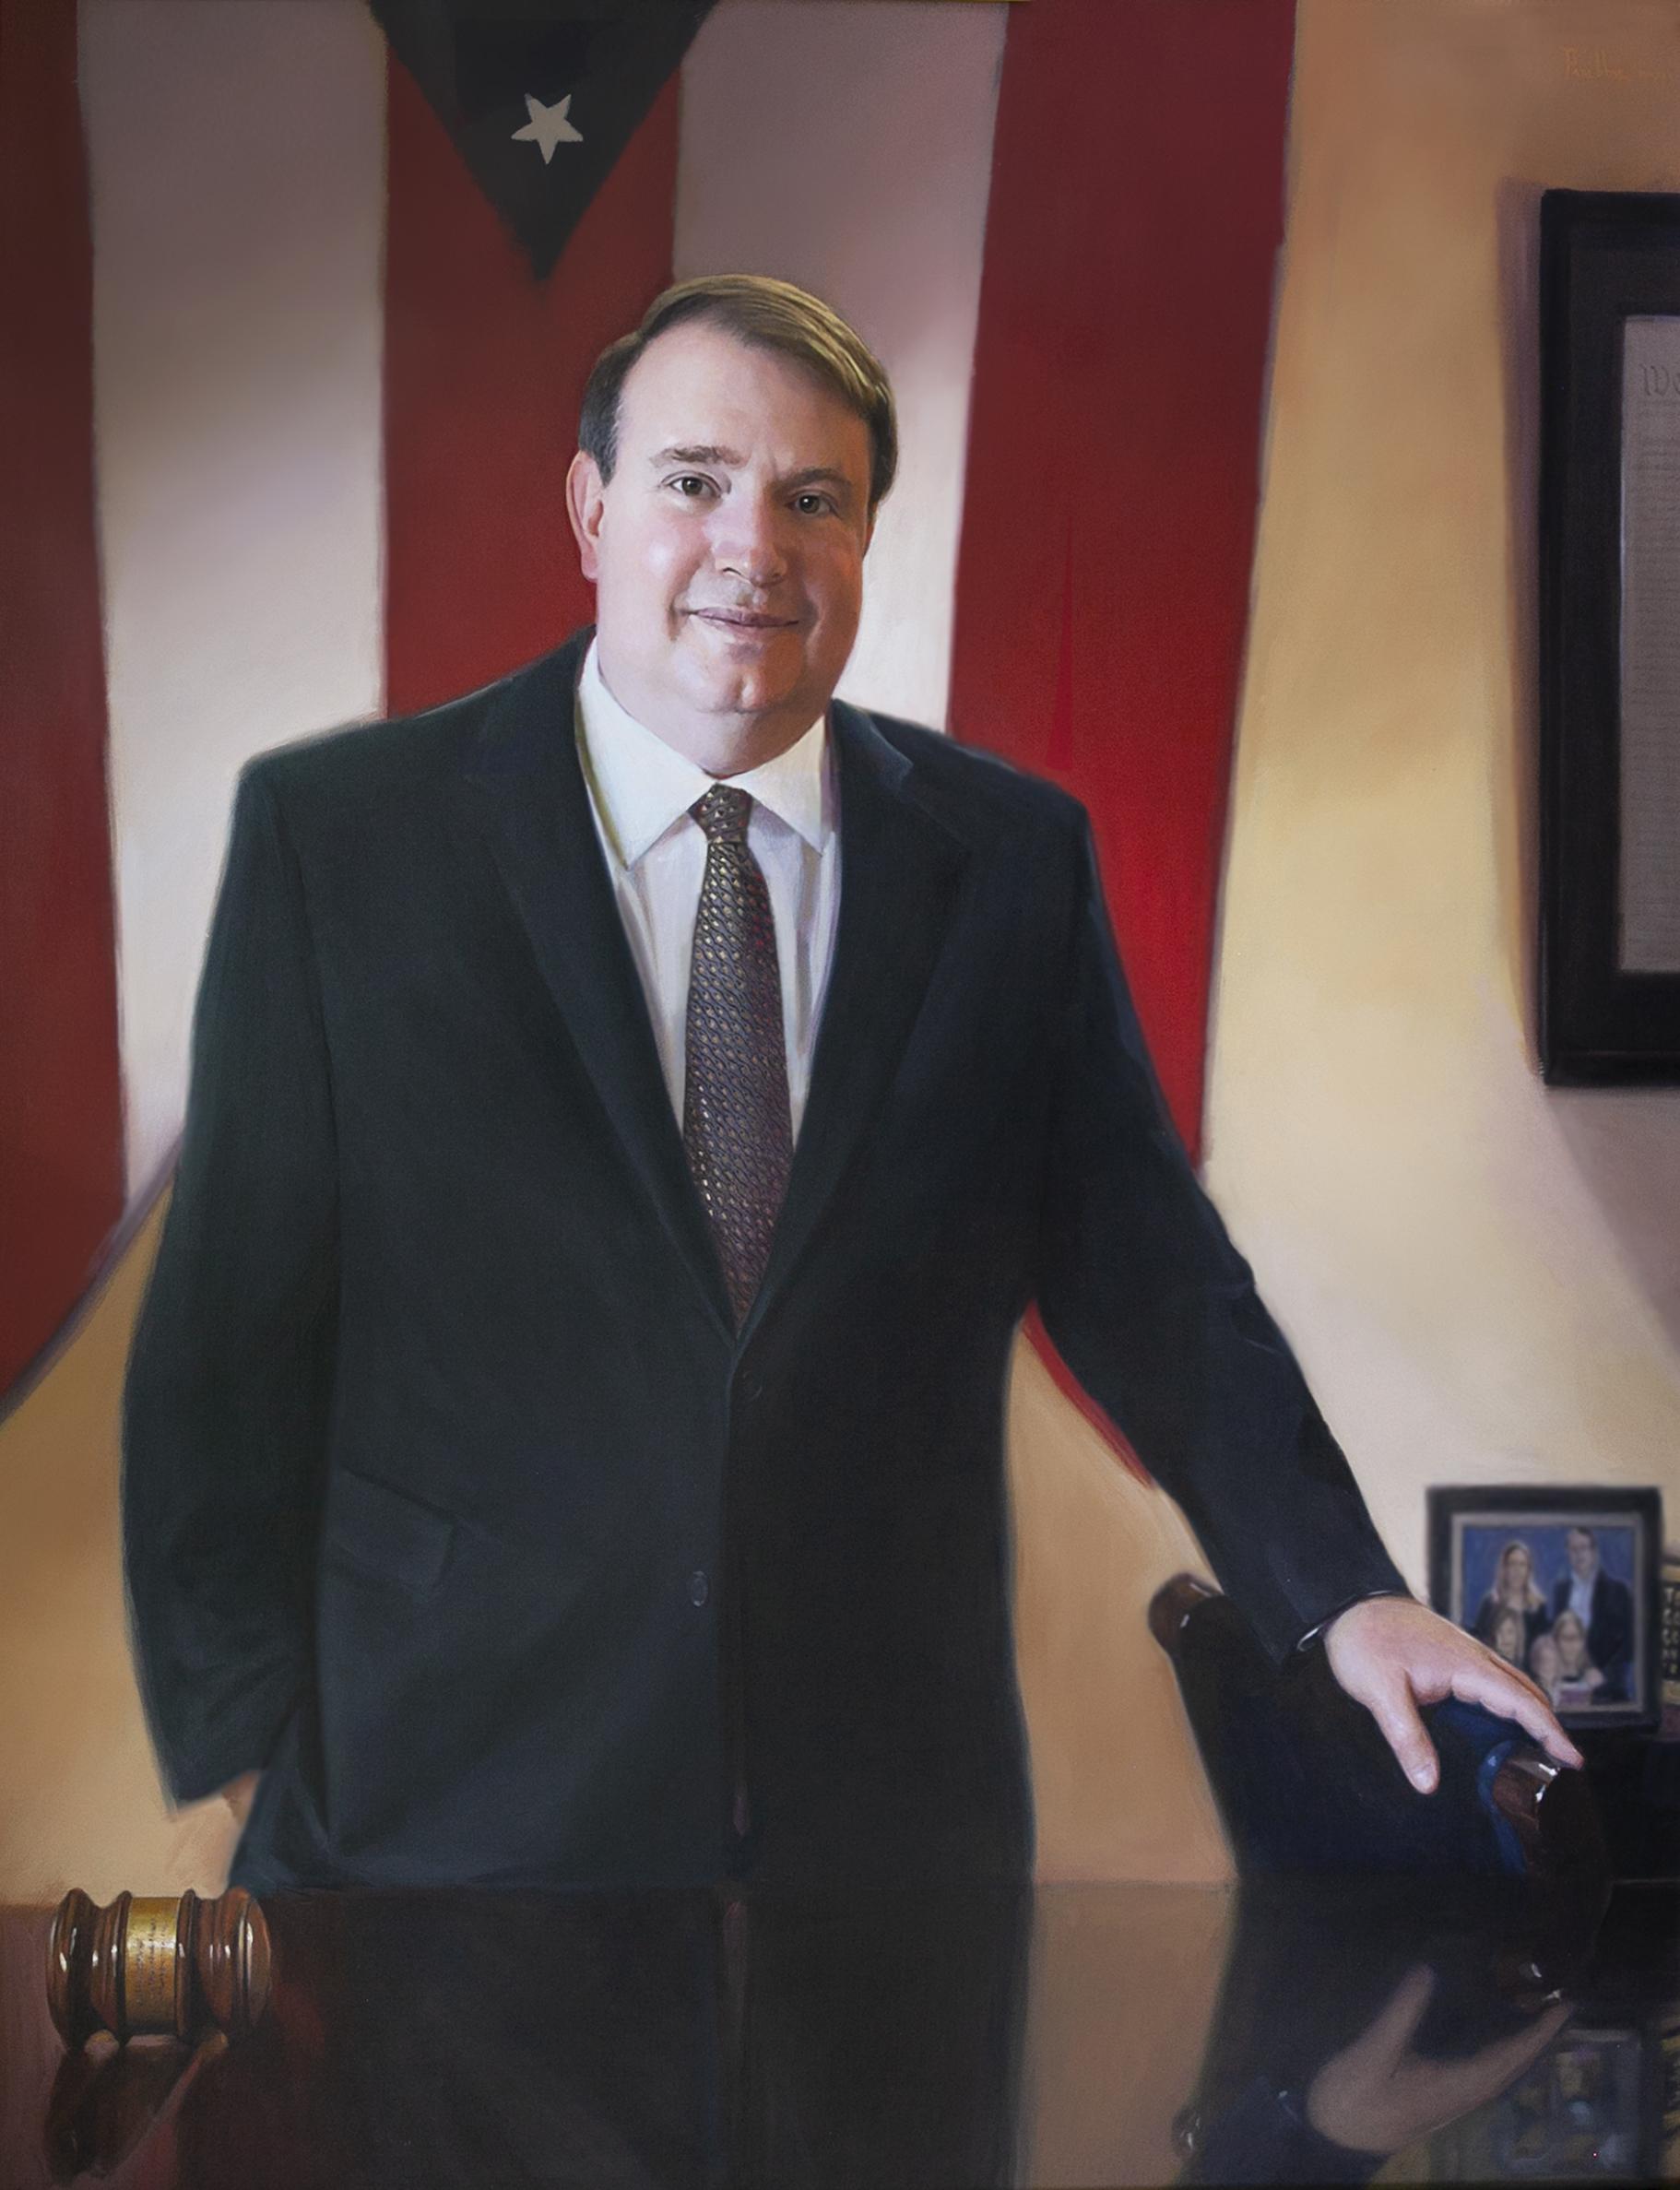 Portrait of Former Ohio Senate President Unveiled at Statehouse